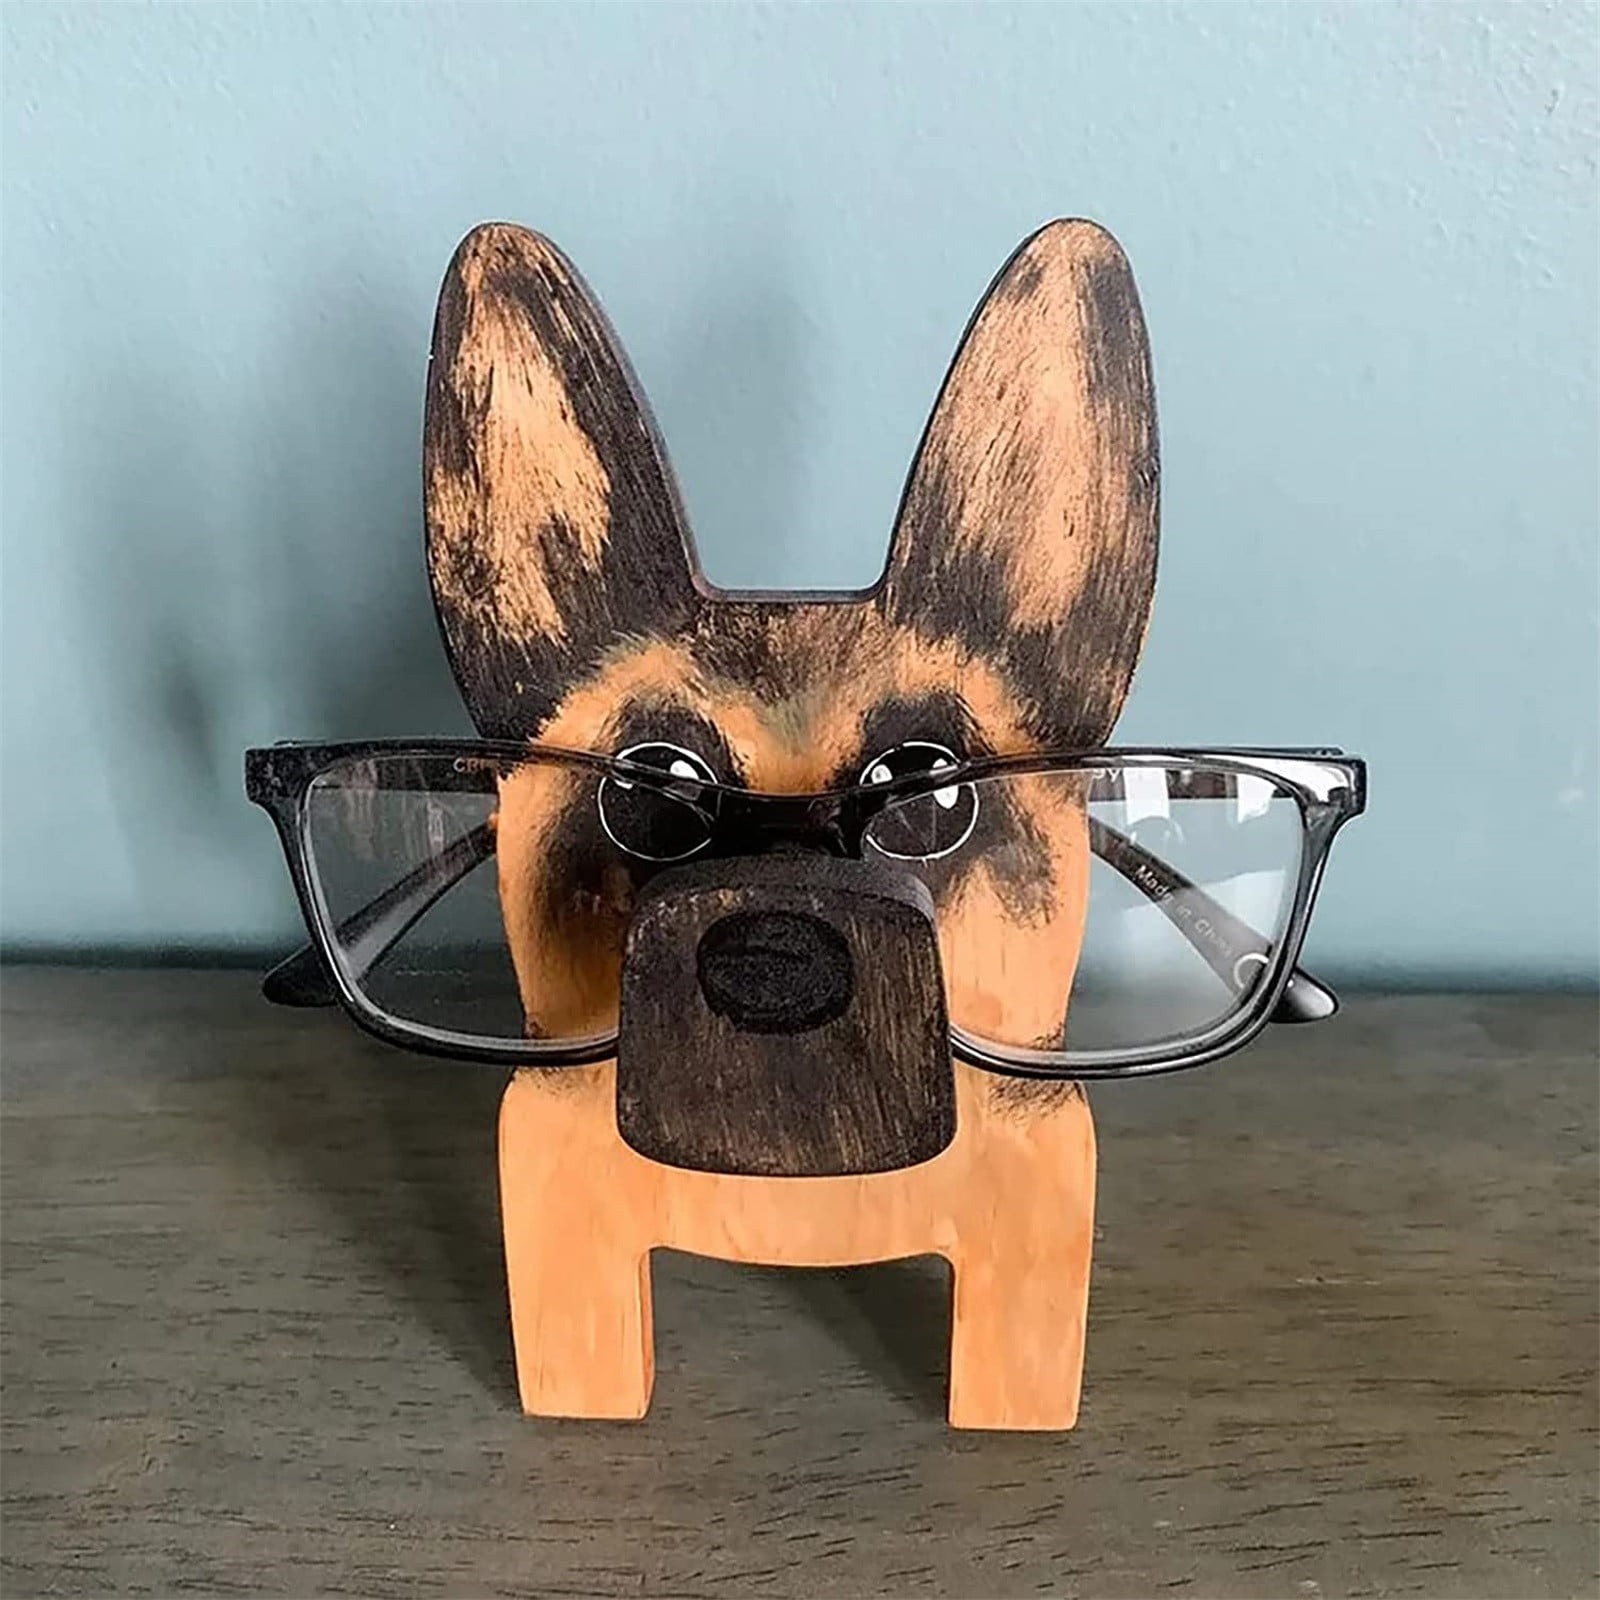 JAVOedge Wooden Hand Carved Animal Eyeglass Holder Display Stand